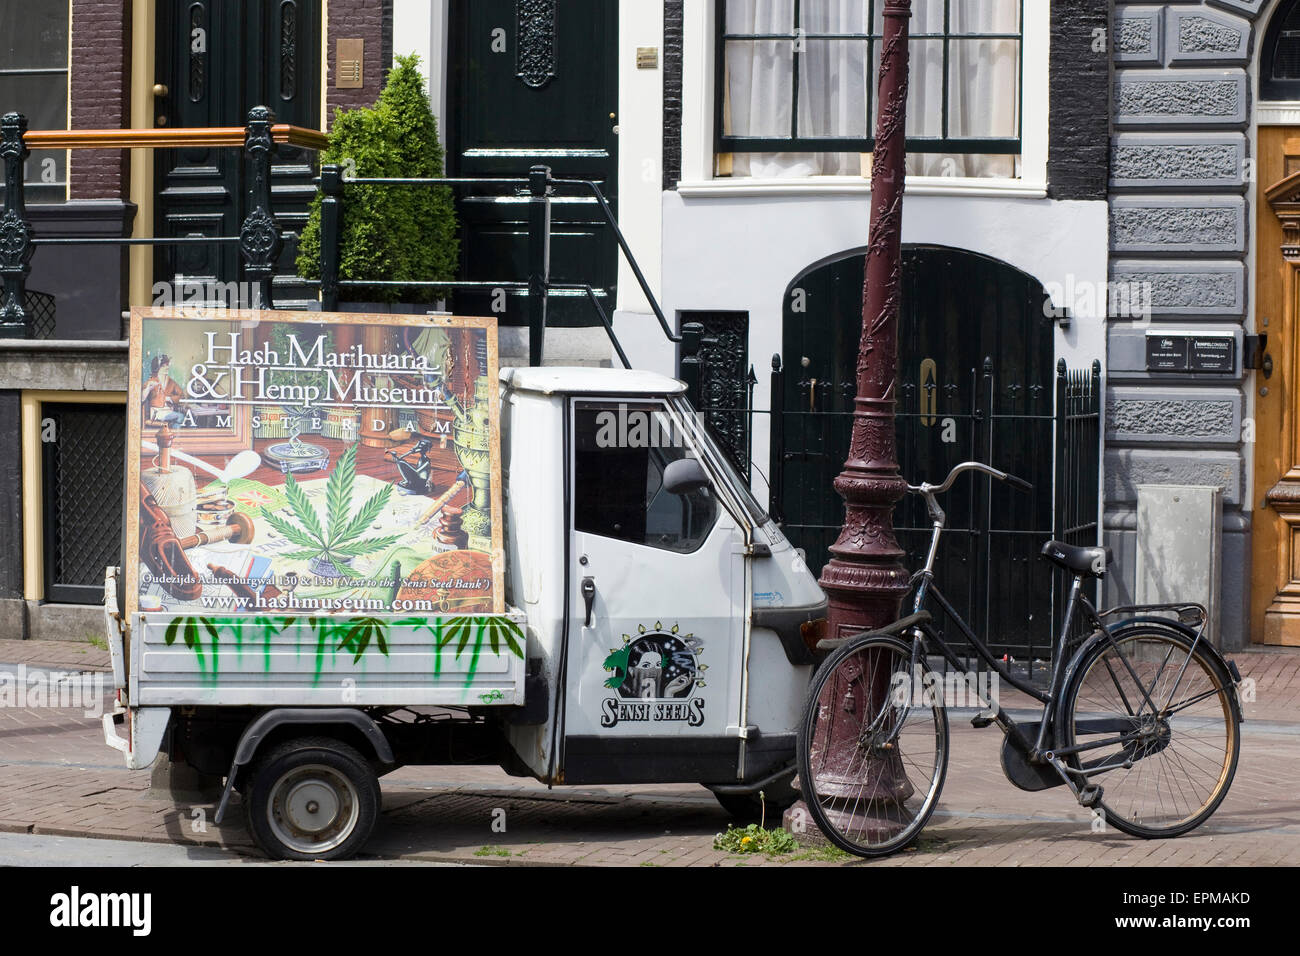 Miniature van advertising the Hash Museum in Amsterdam Holland Stock Photo